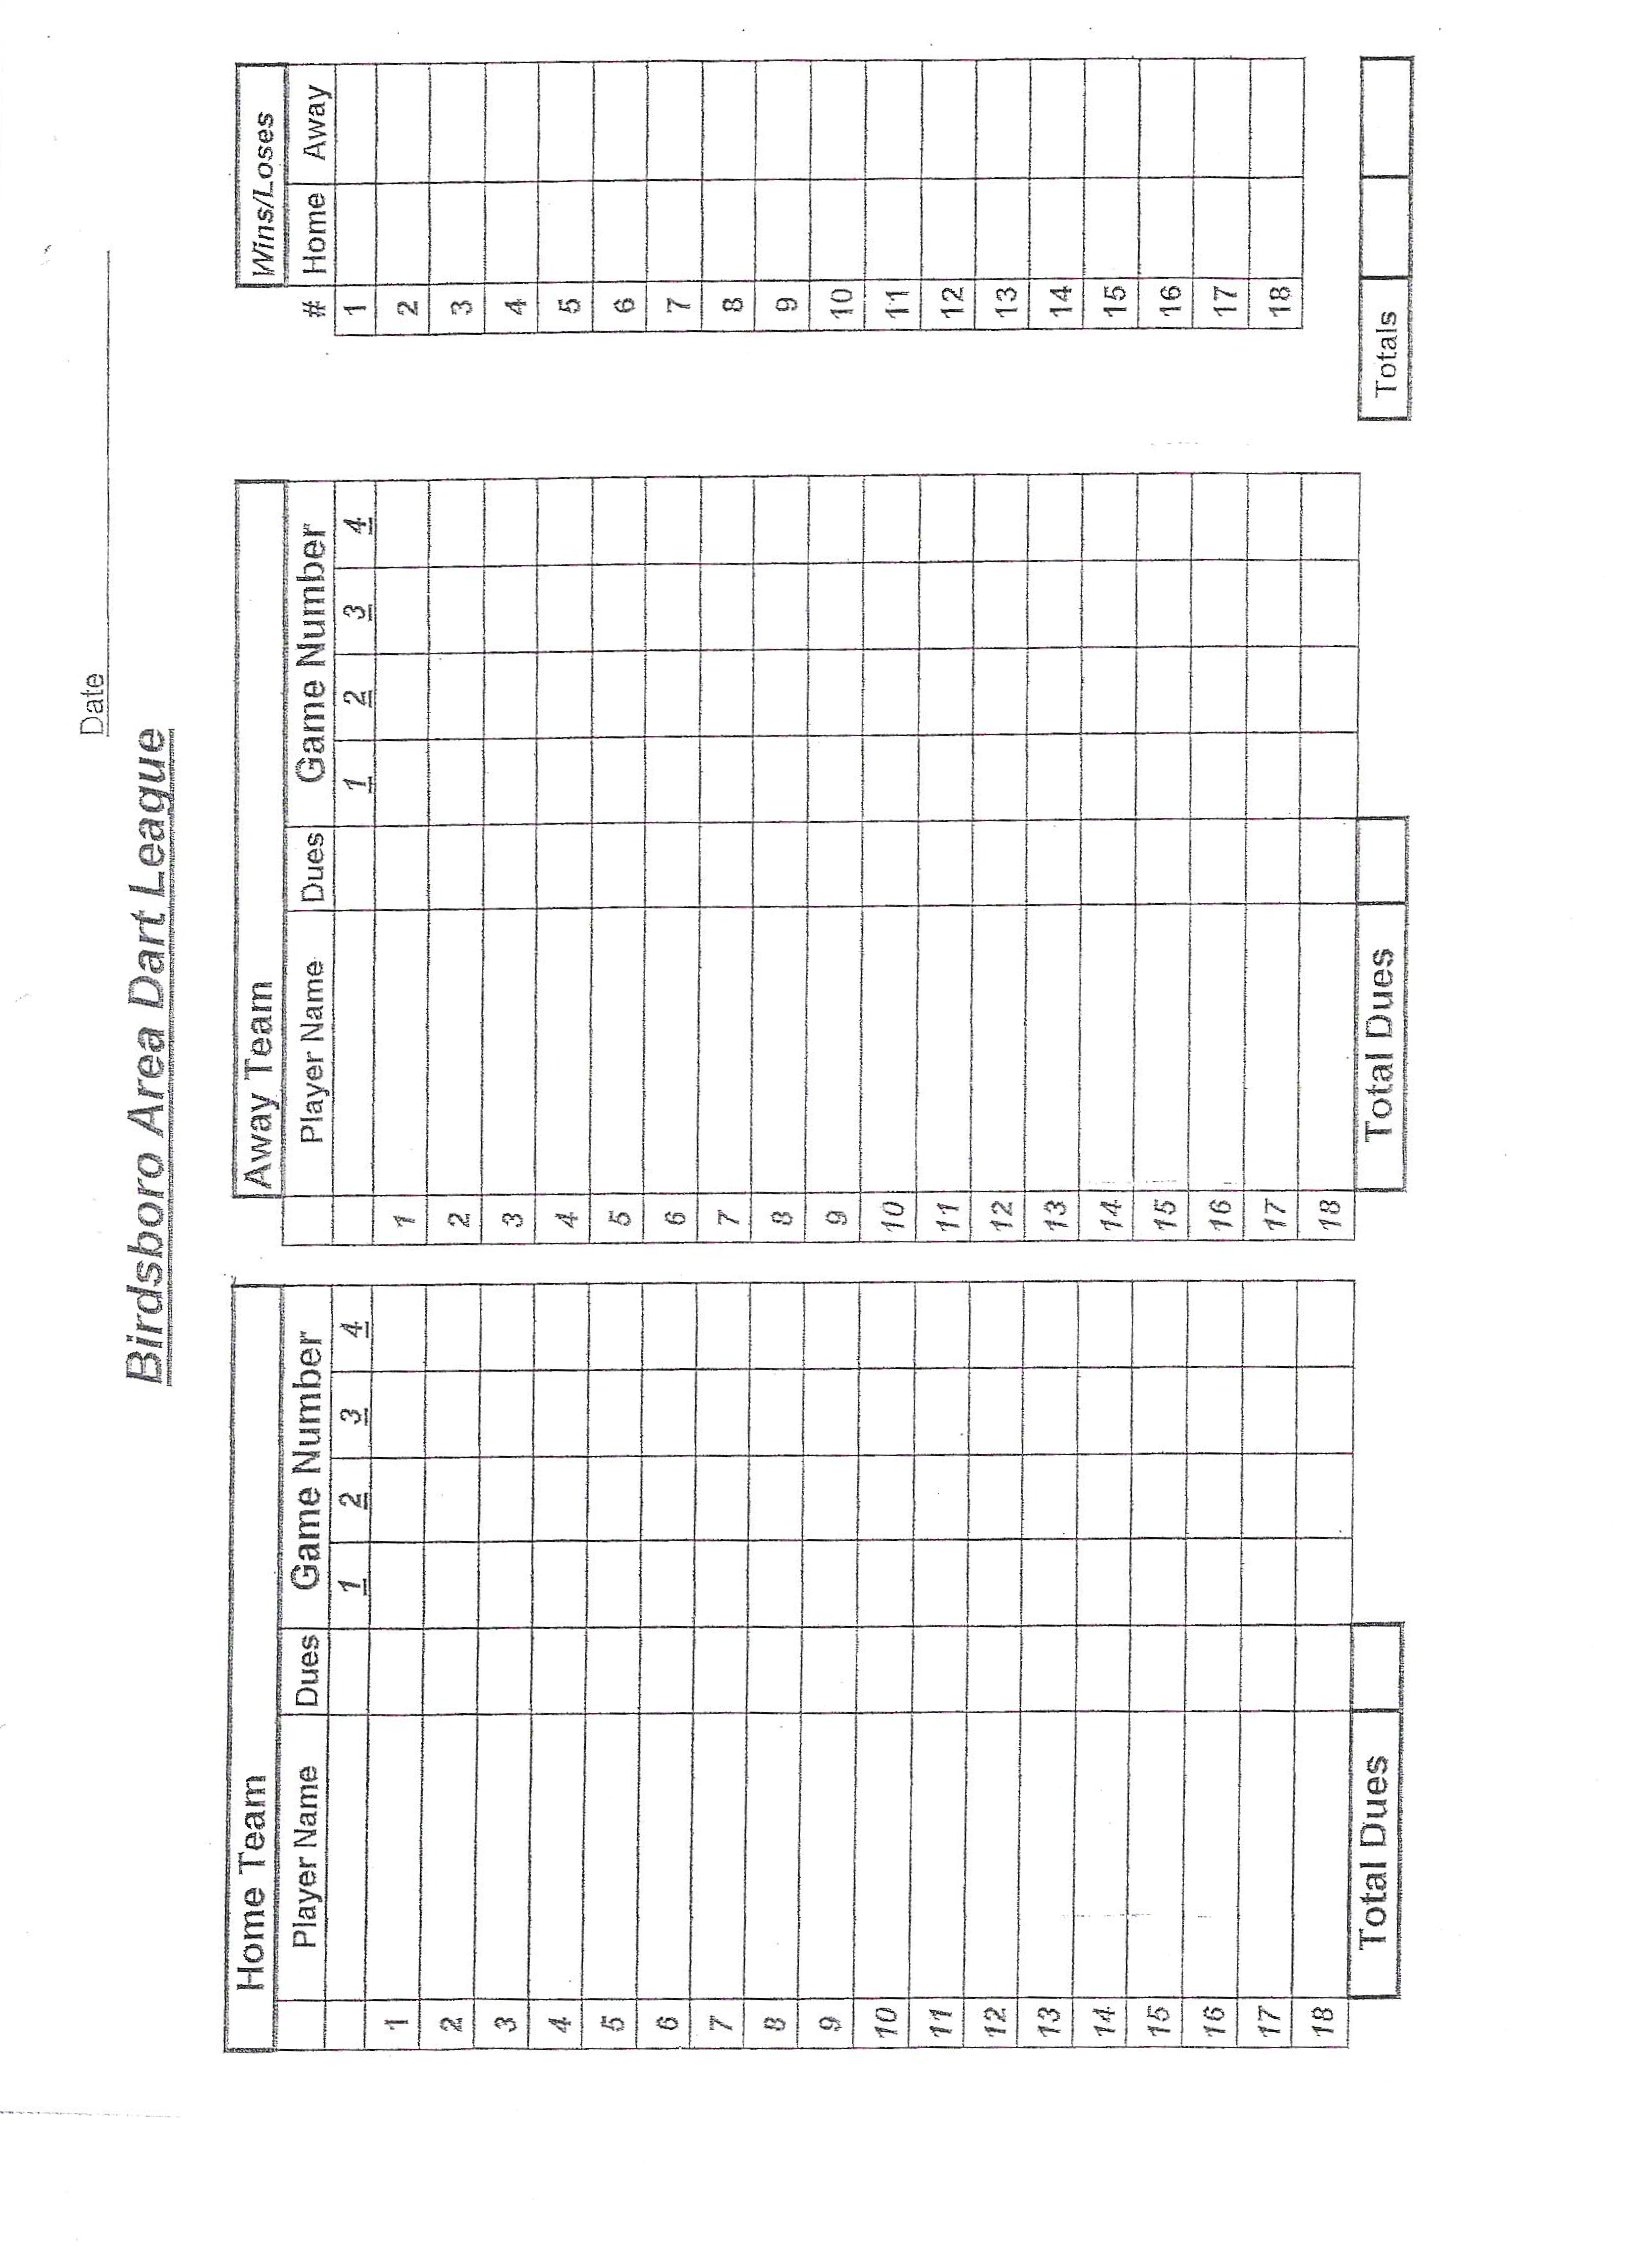 darts score sheet template